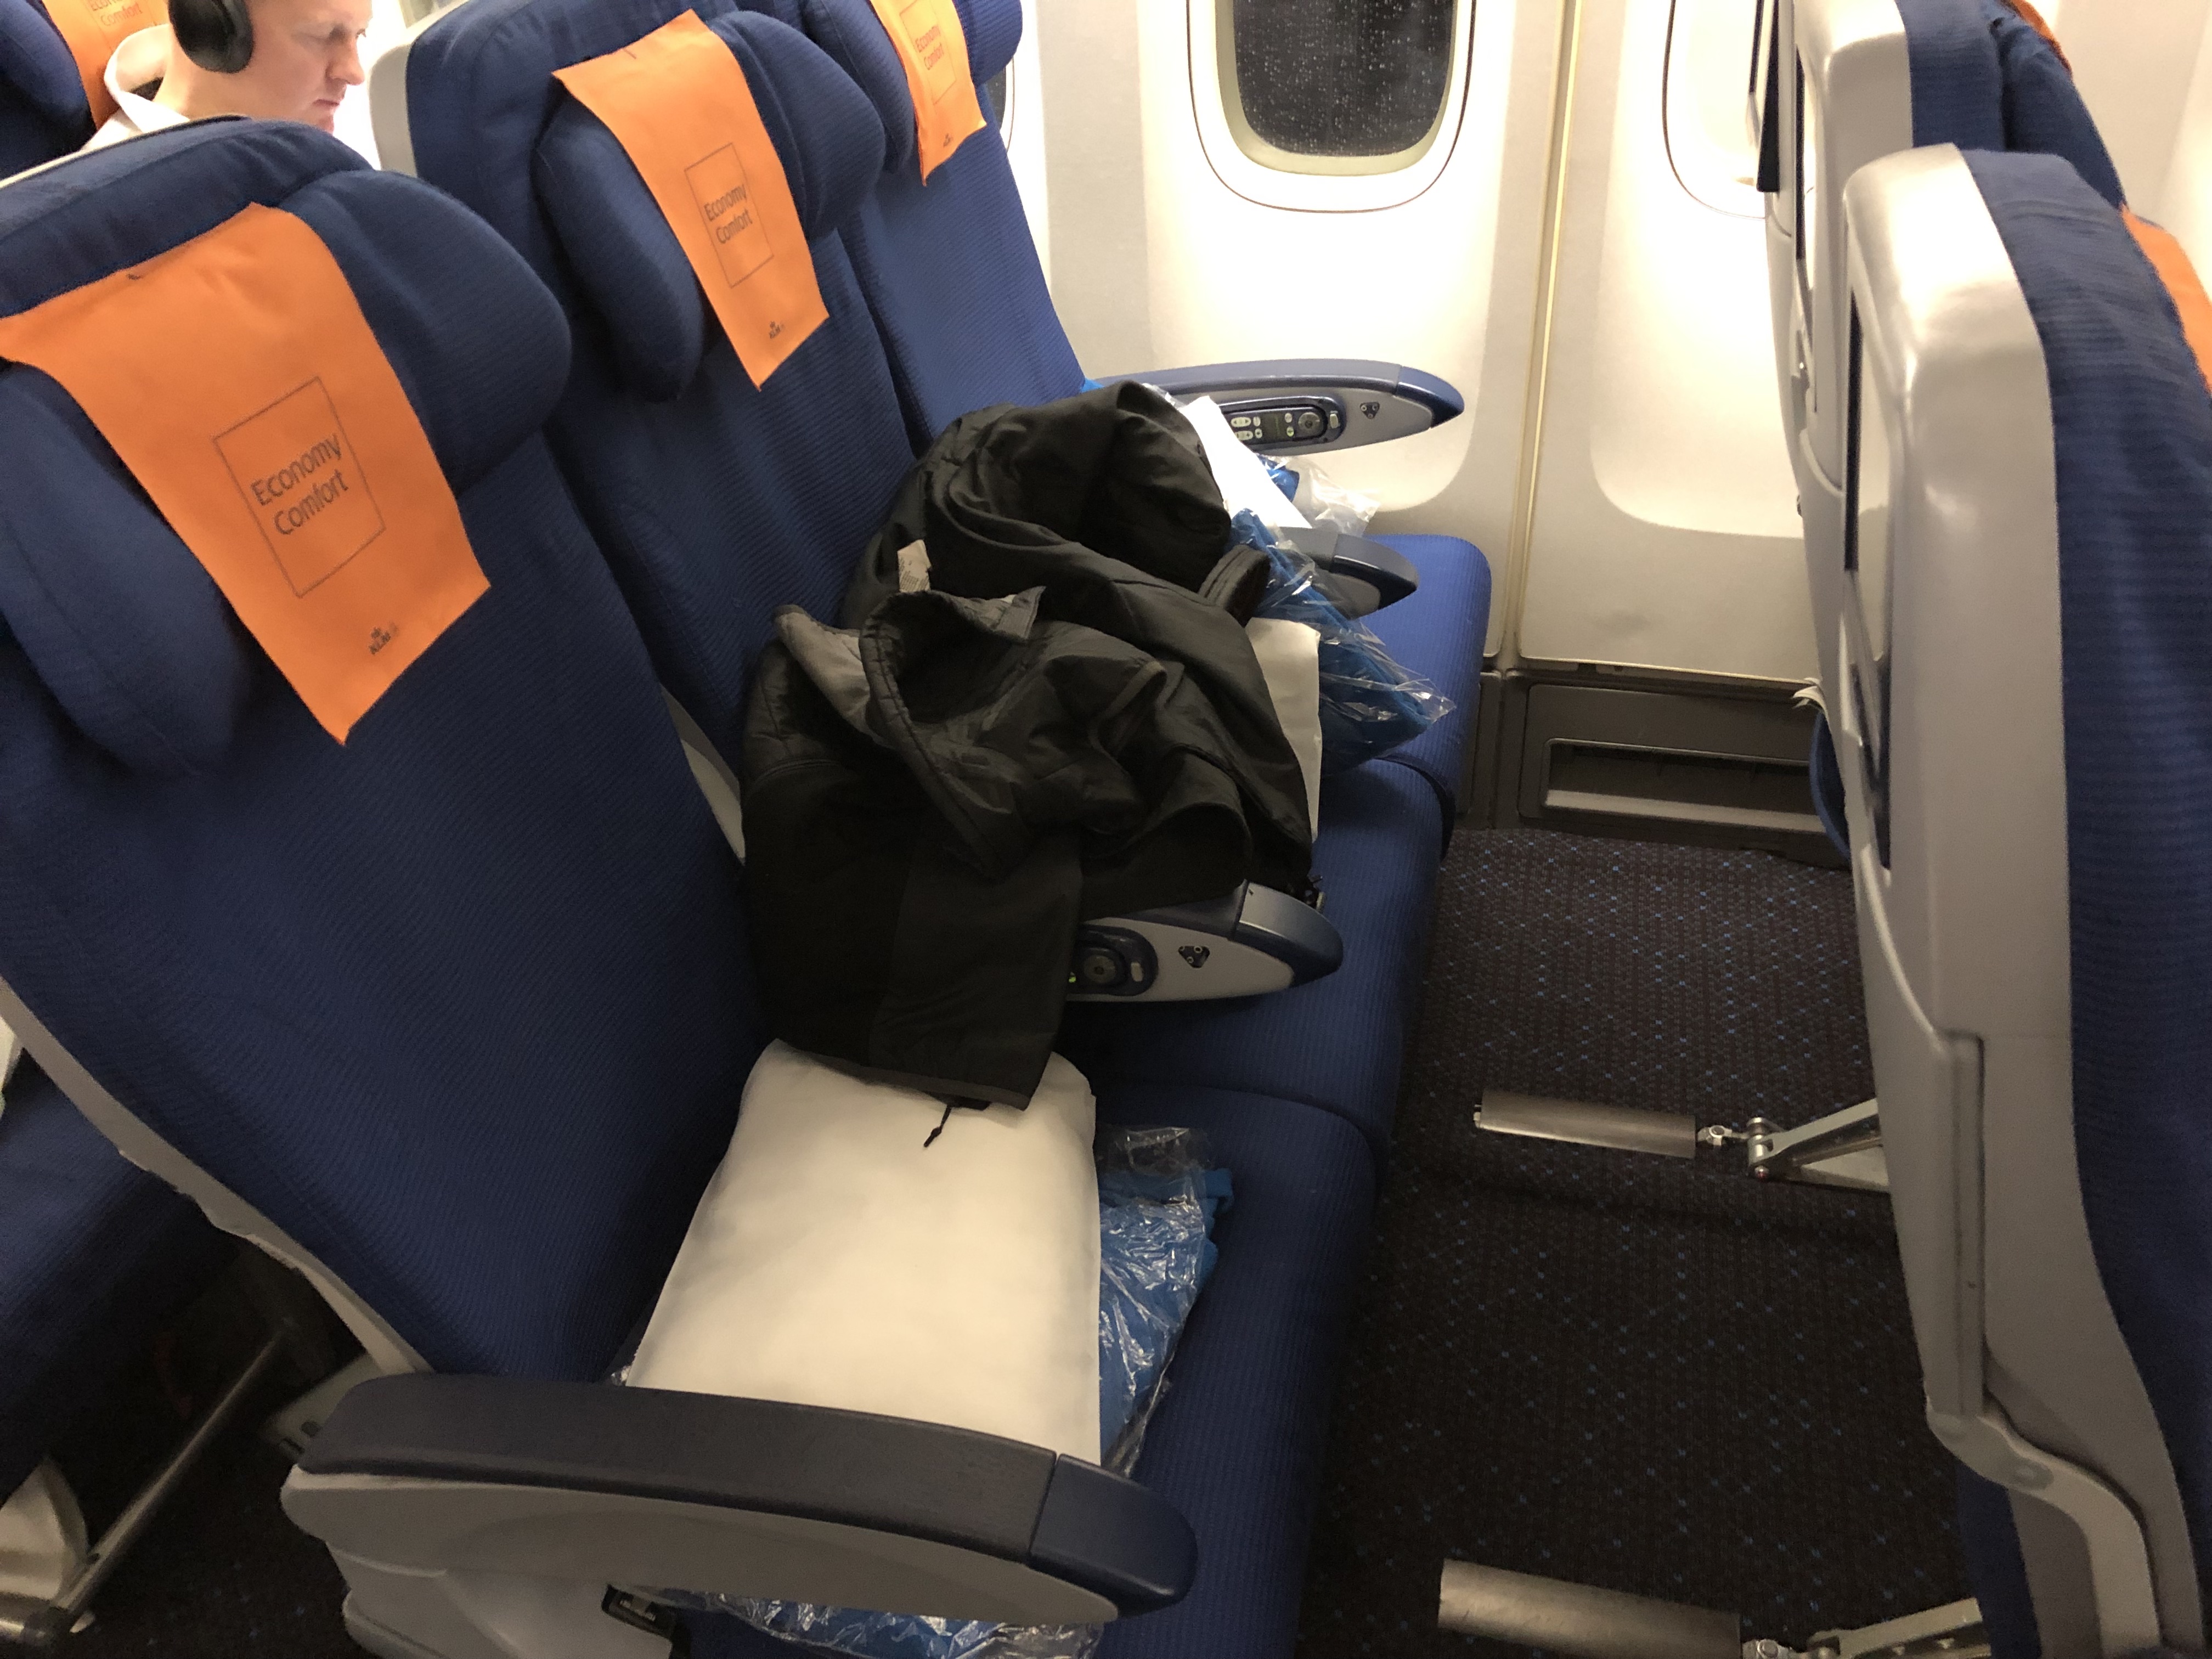 KLM Economy Comfort seats on 747-400 legroom